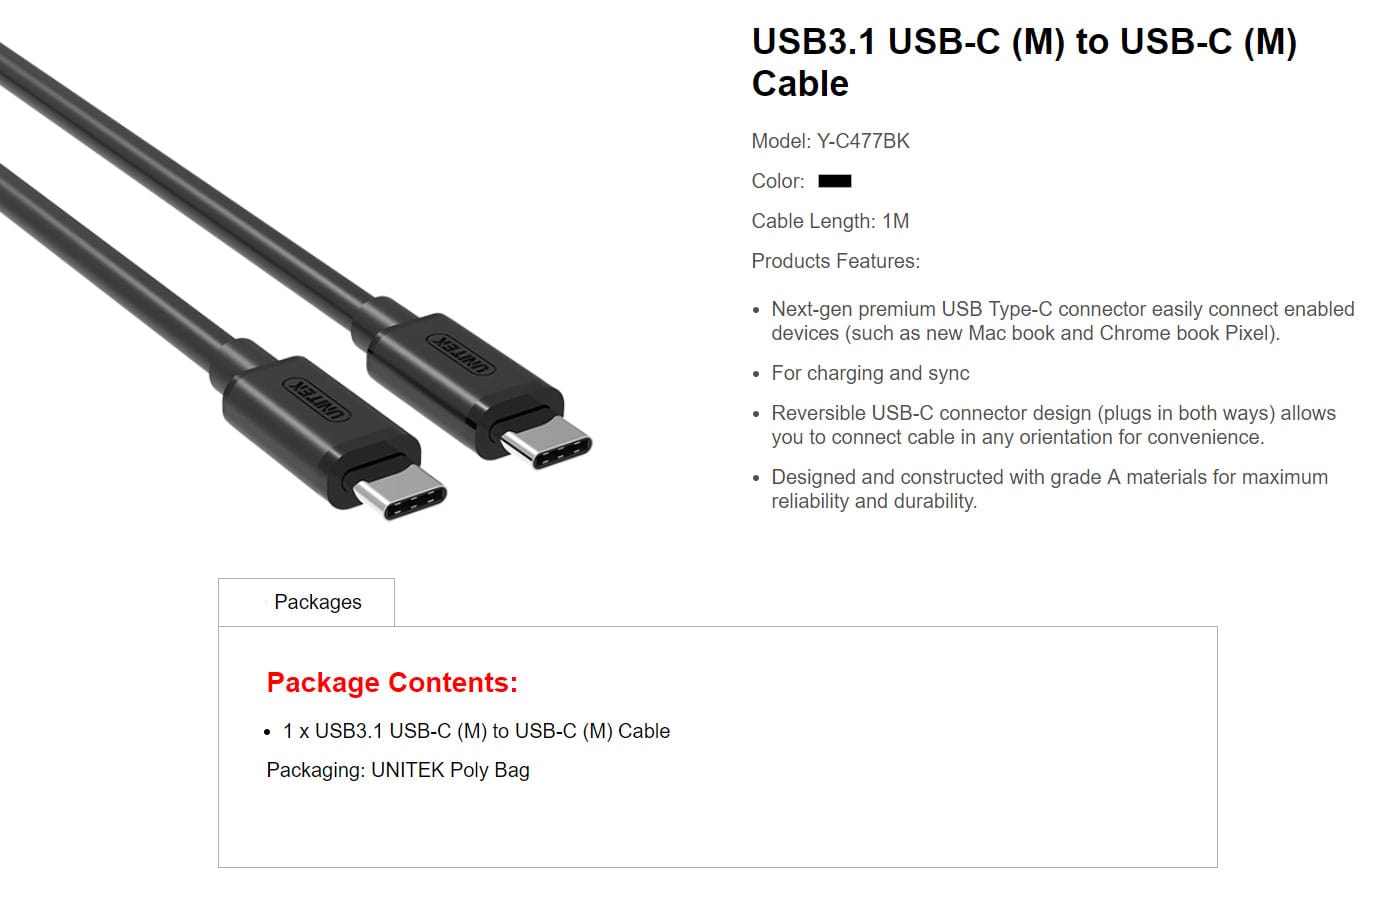 Unitek  USB C to USB C Cable Y C477BK